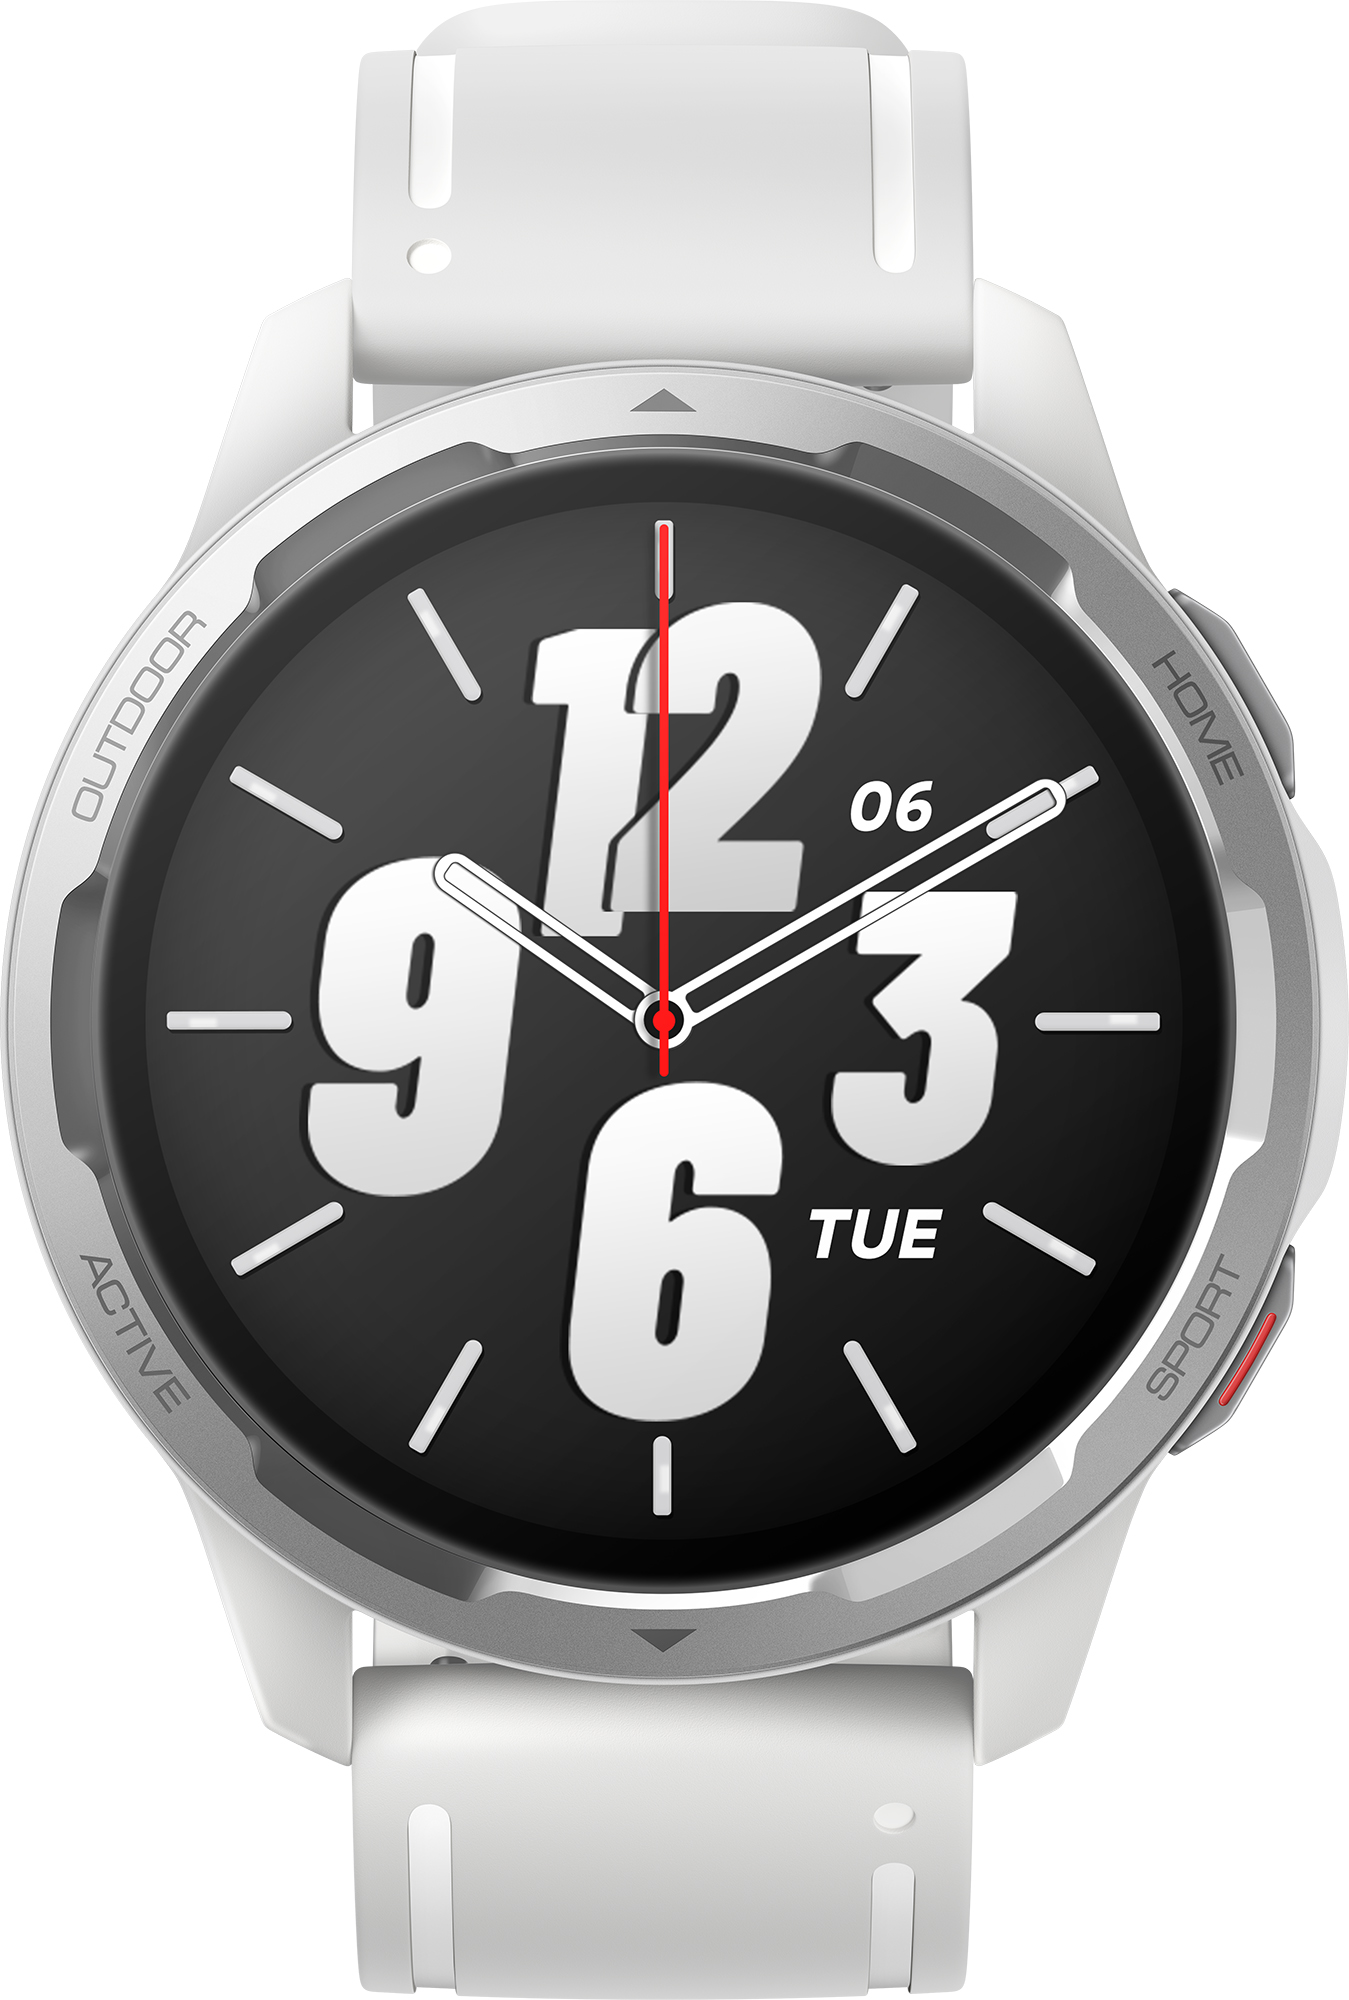 Смарт-часы XIAOMI Watch S1 Active Moon White в Киеве